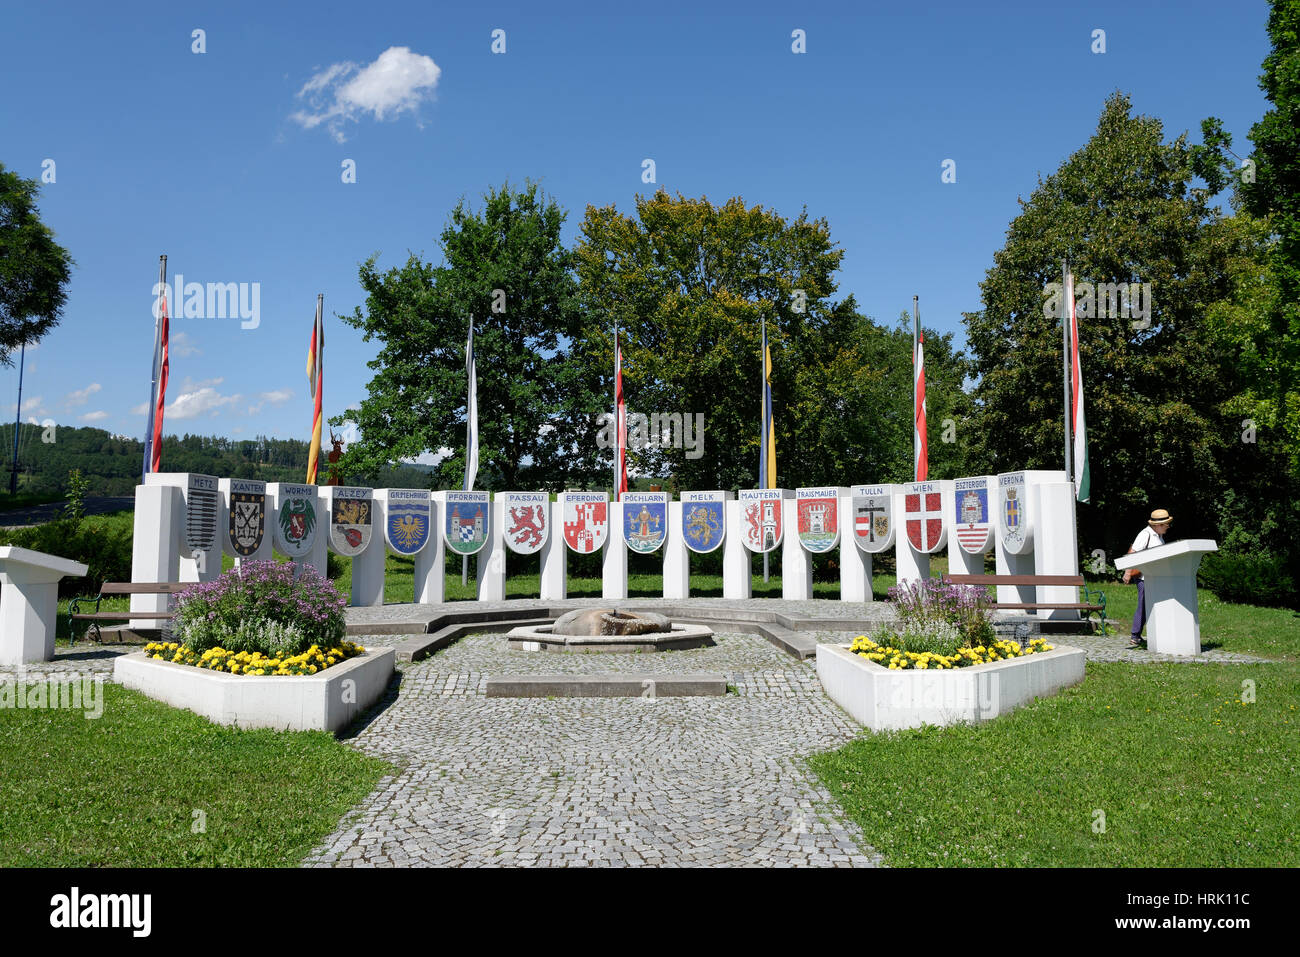 Nibelungen monument on the Donaulände, Pöchlarn, Lower Austria, Austria Stock Photo